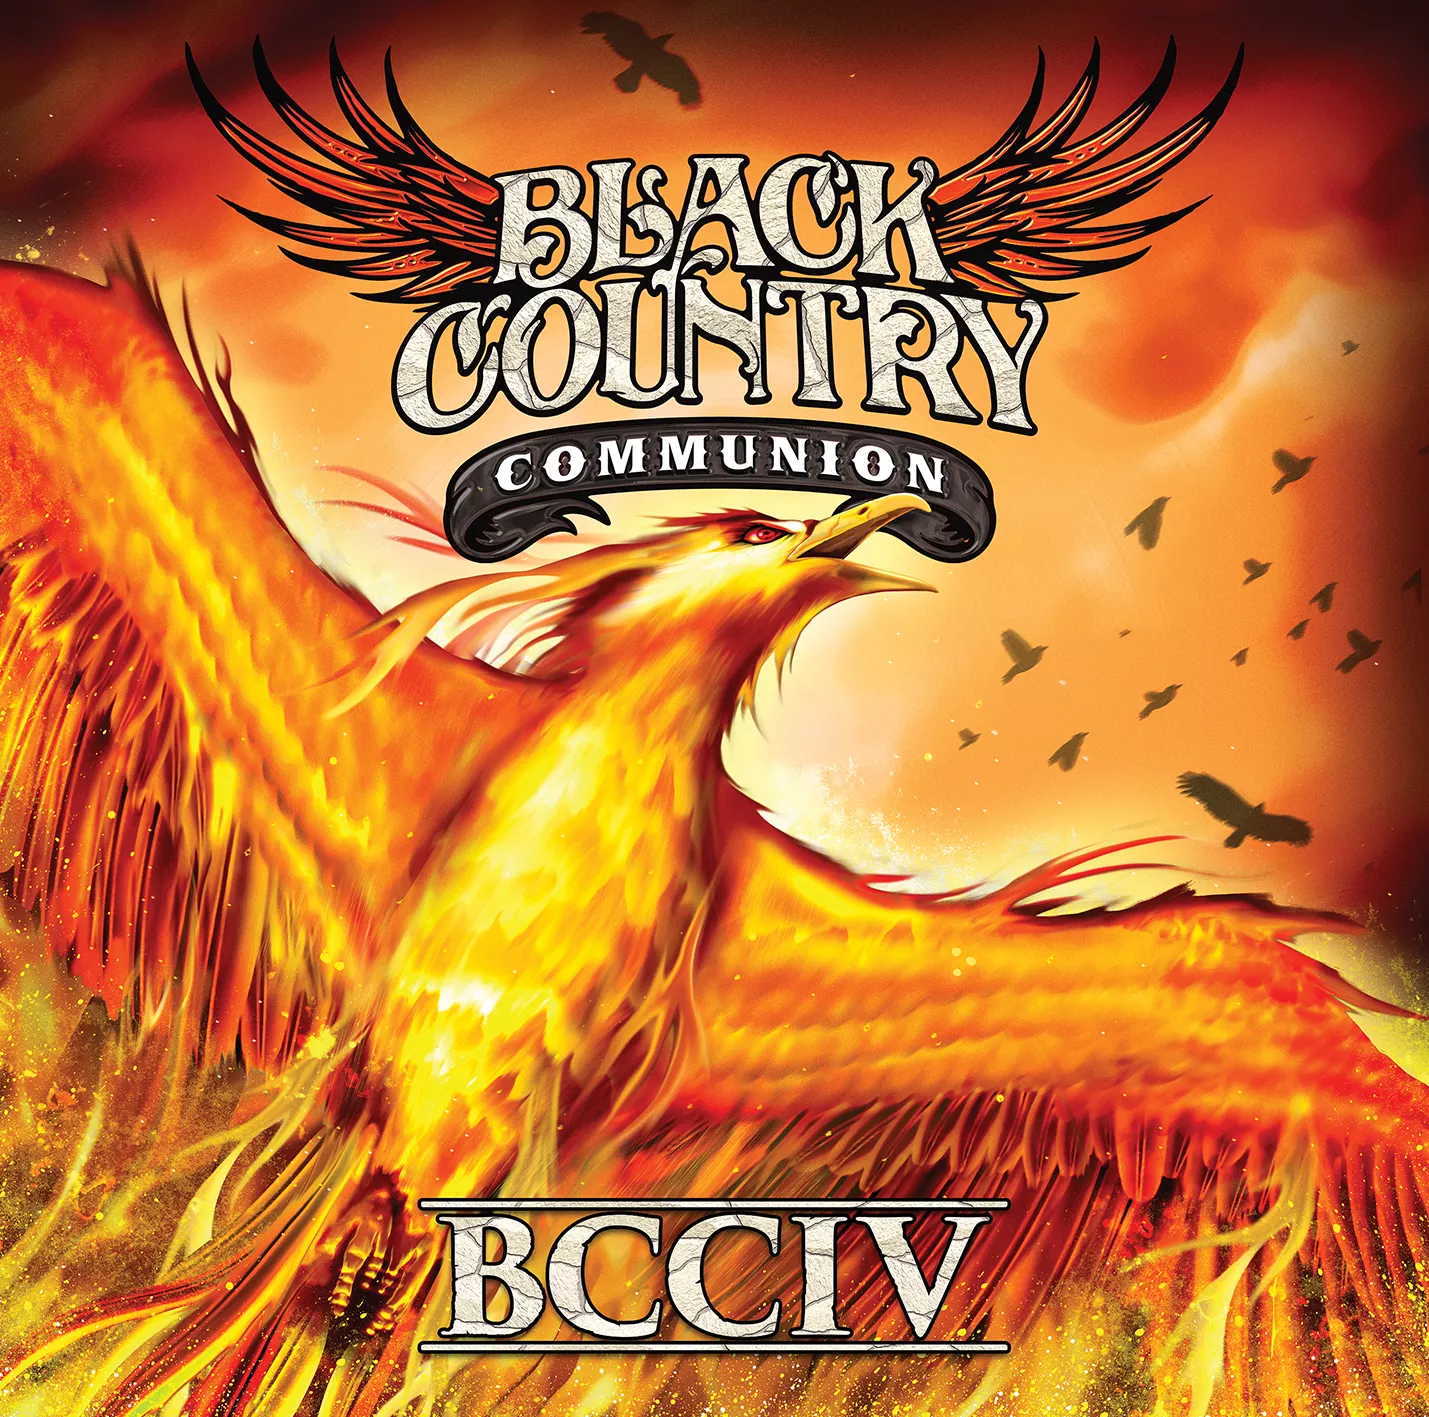 BCC IV - Black Country CVommunion